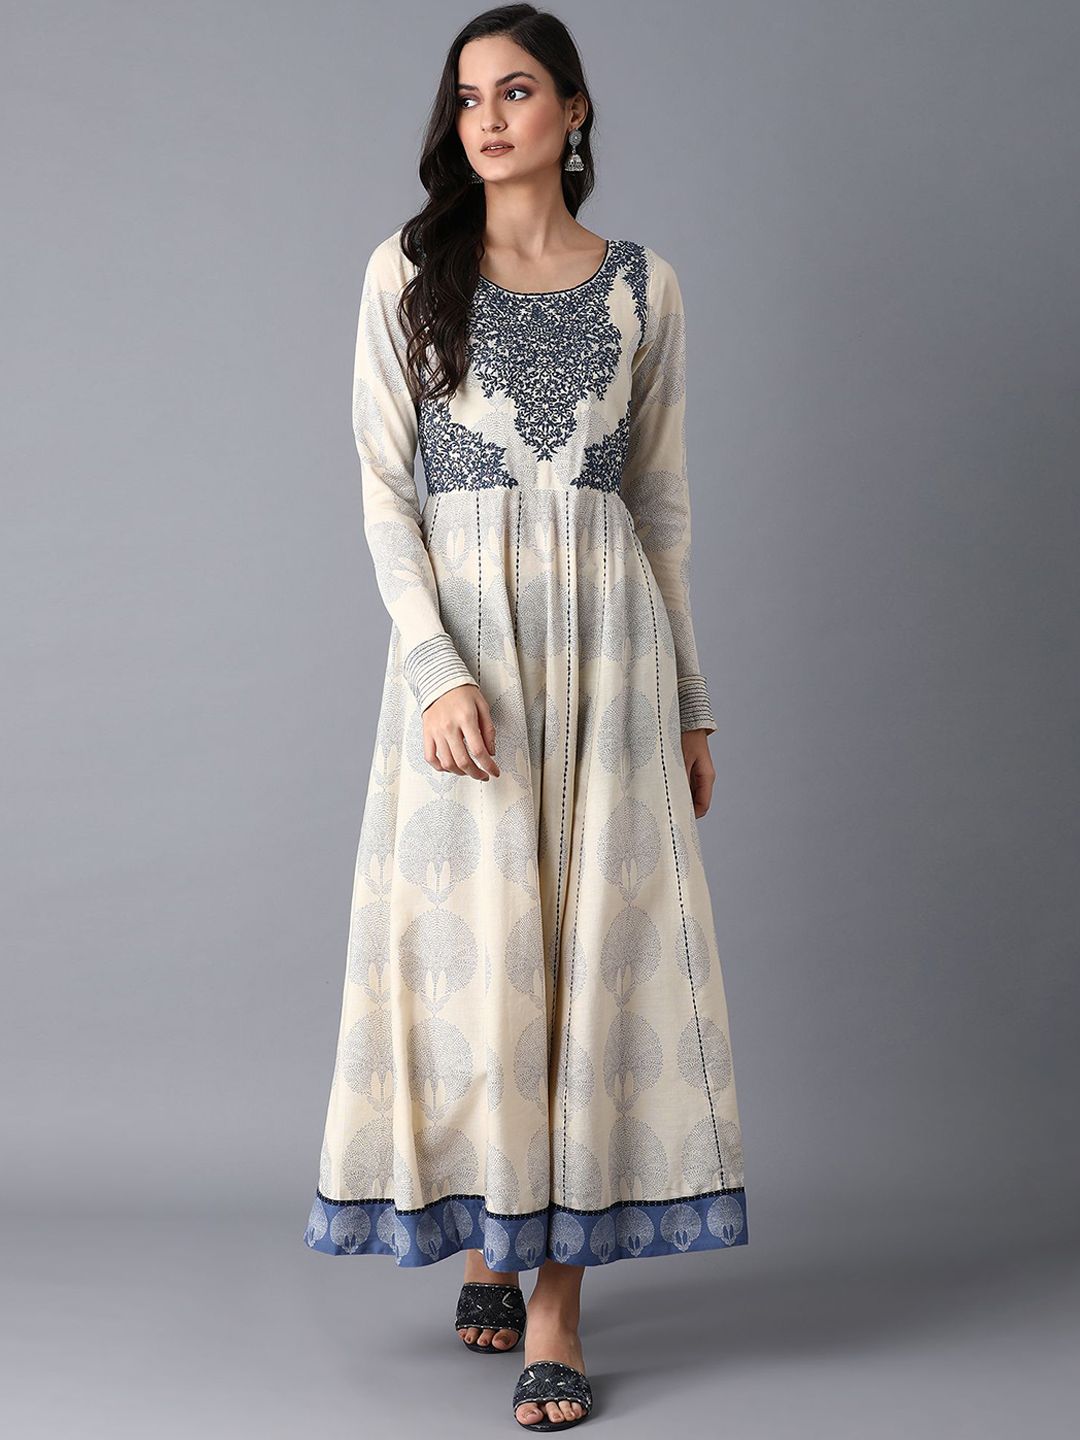 W Women Beige Printed Ethnic Maxi Dress Price in India